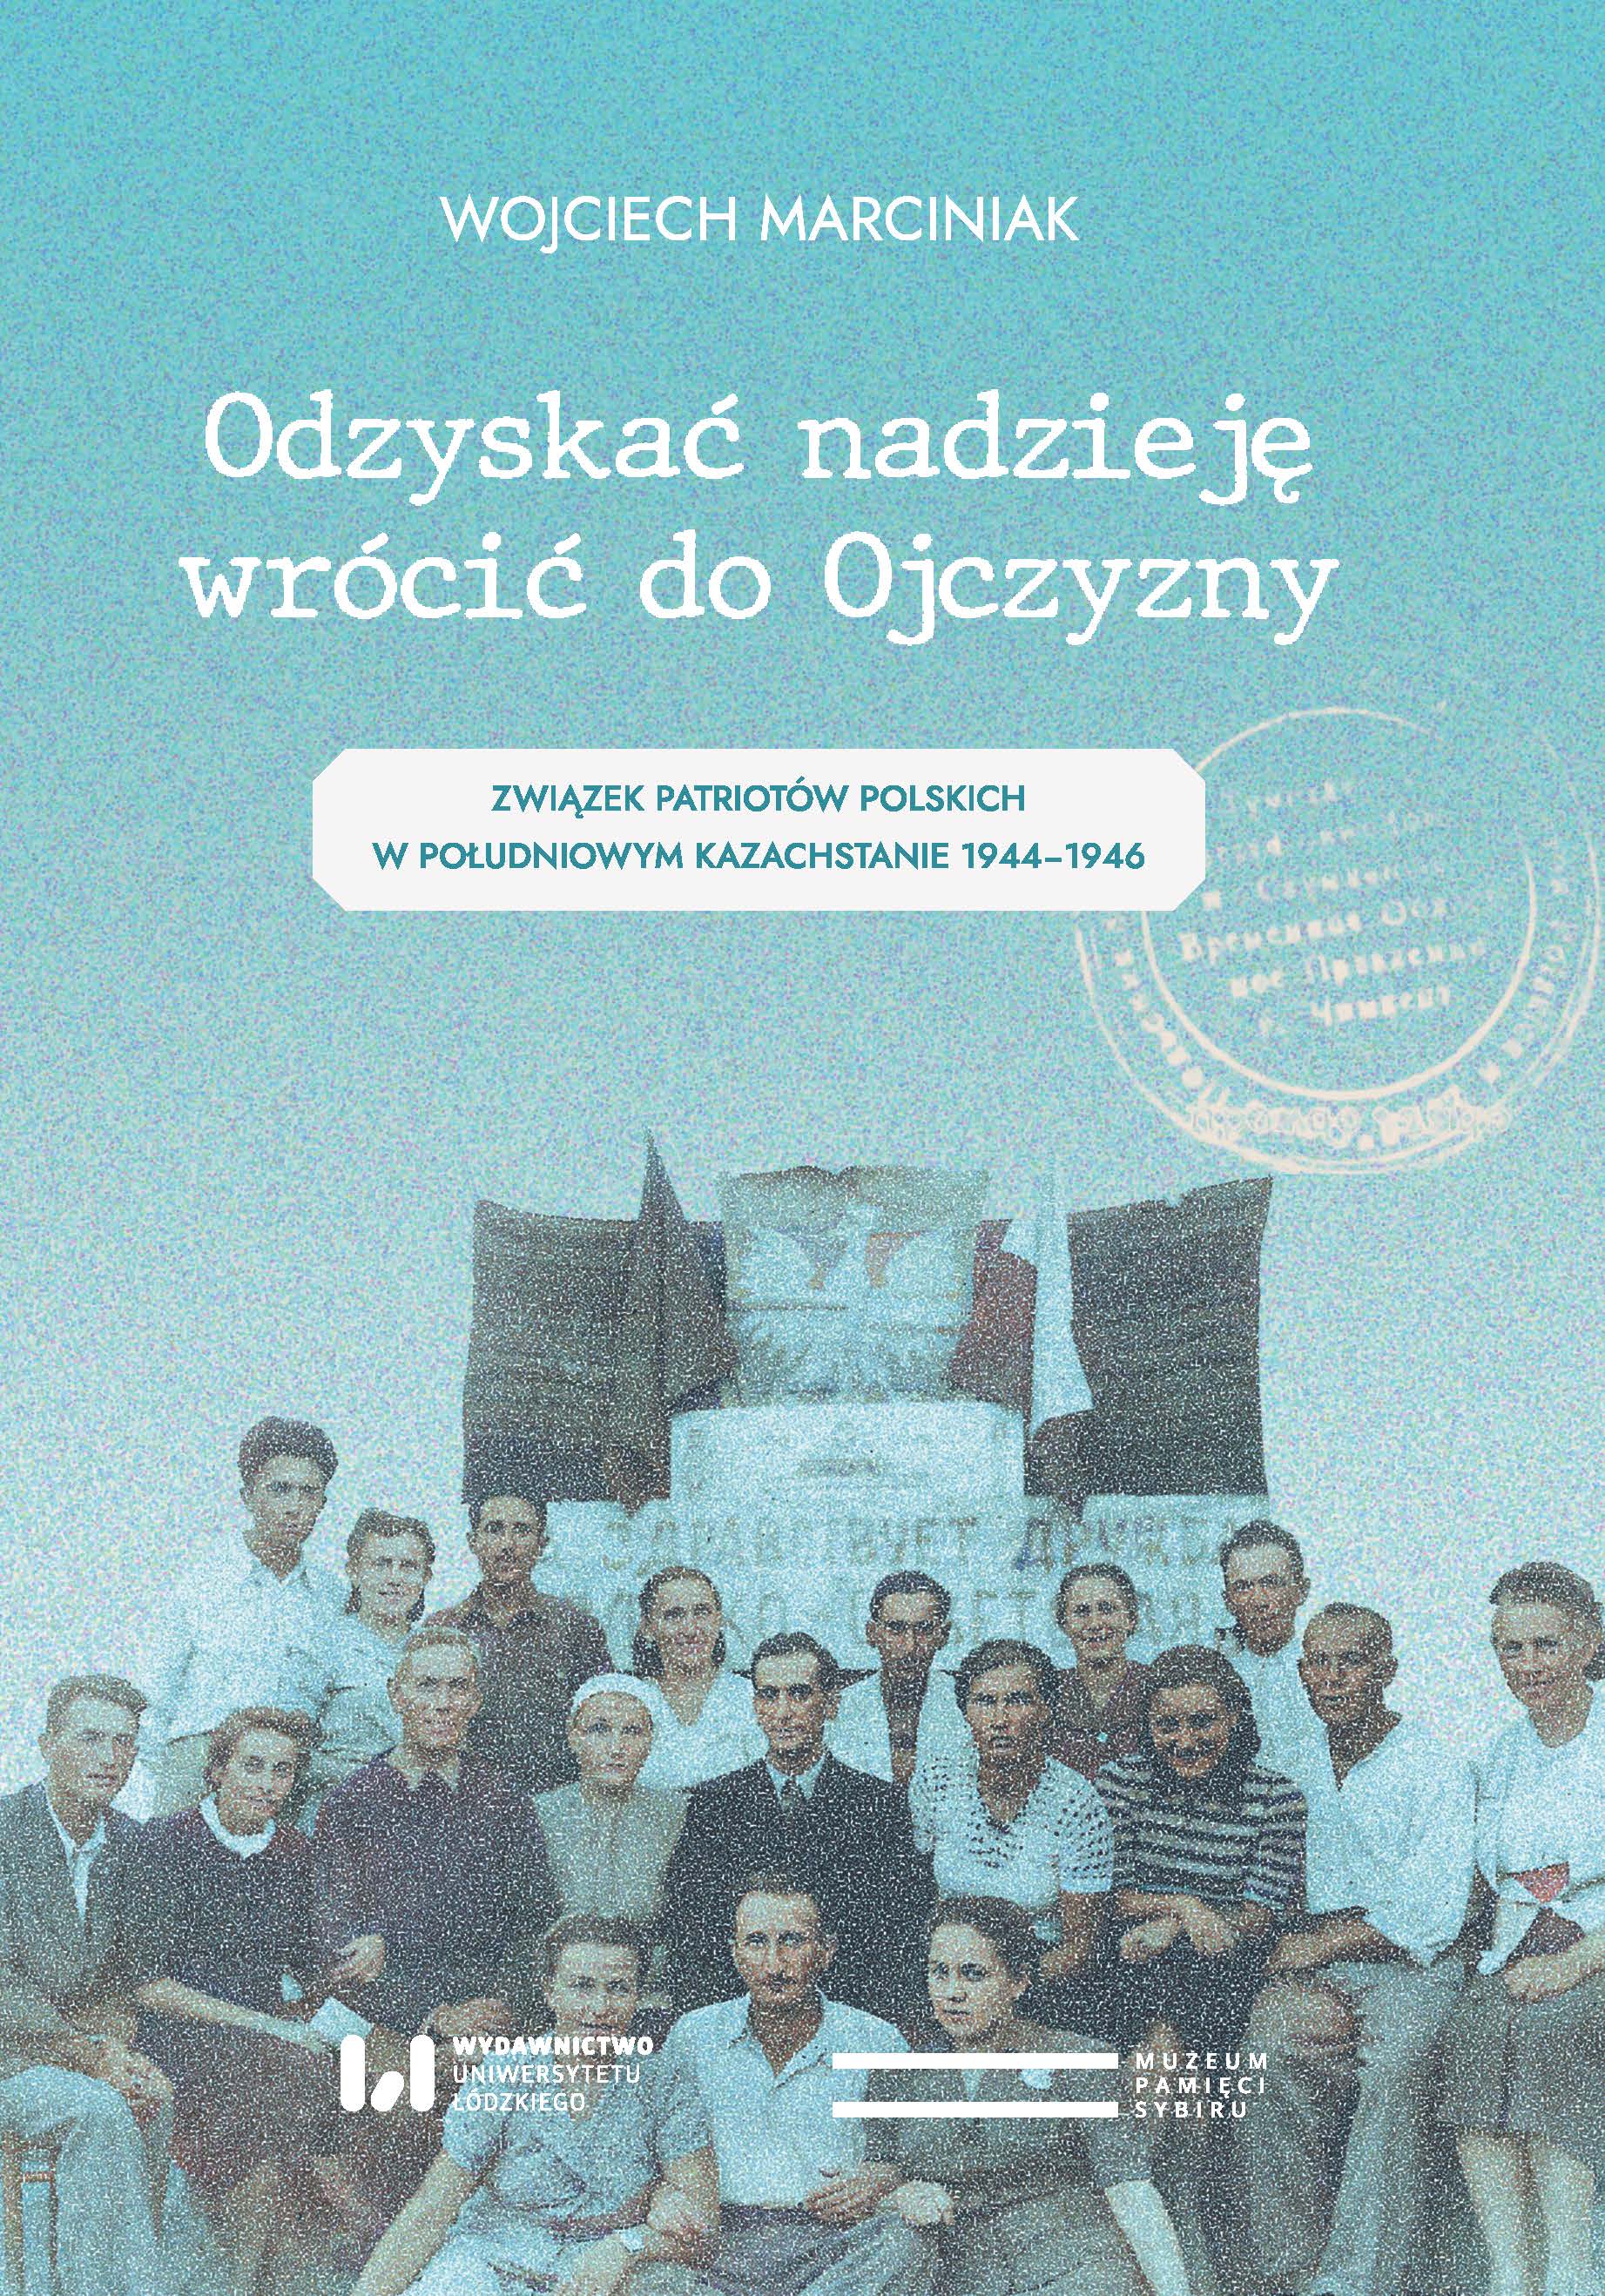 Regain hope, return to Homeland. Union of Polish Patriots in the South Kazakhstan 1944-1946